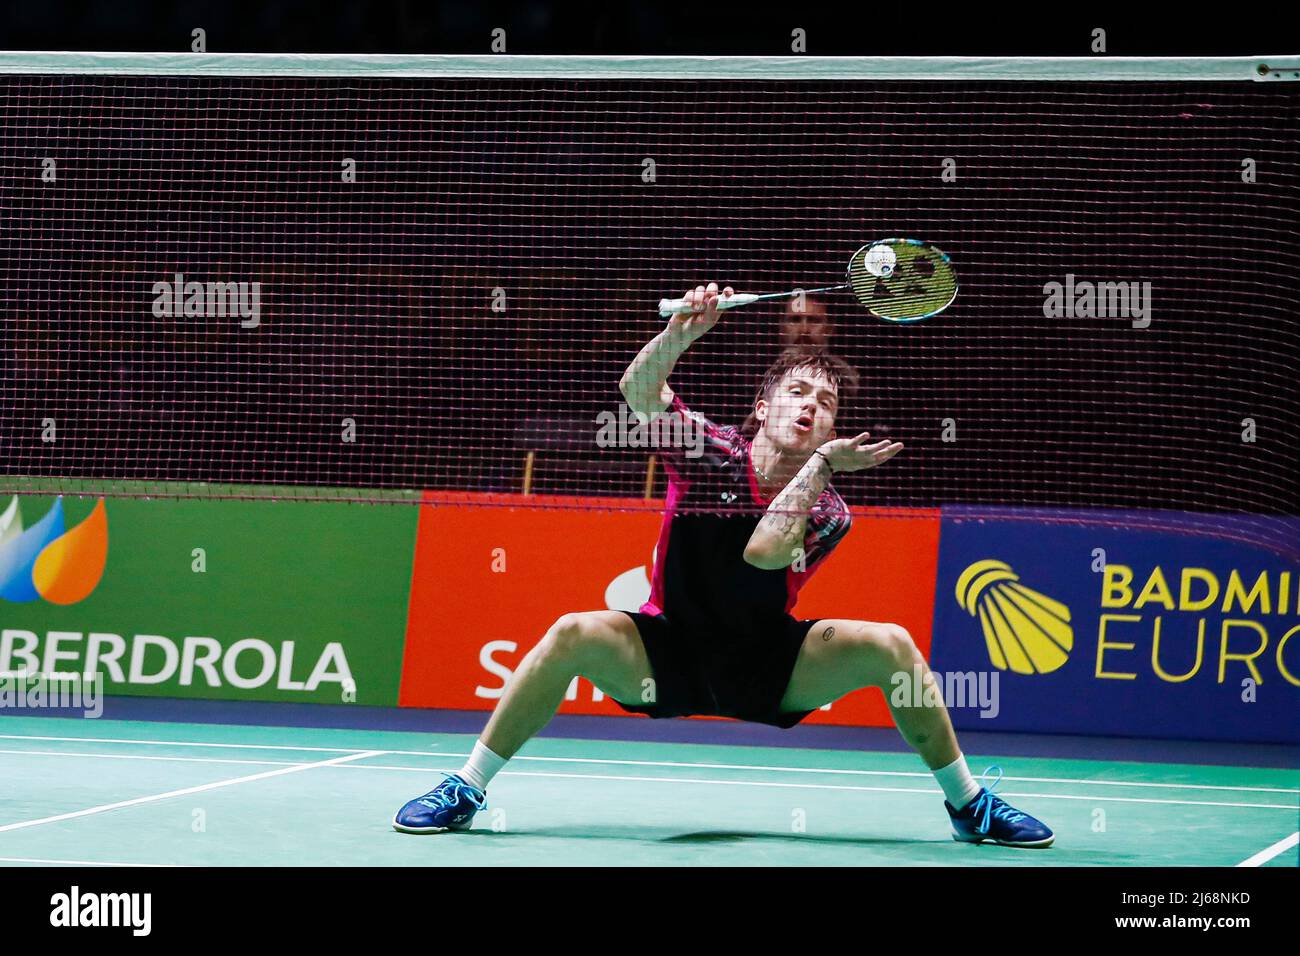 badminton european championships 2022 live